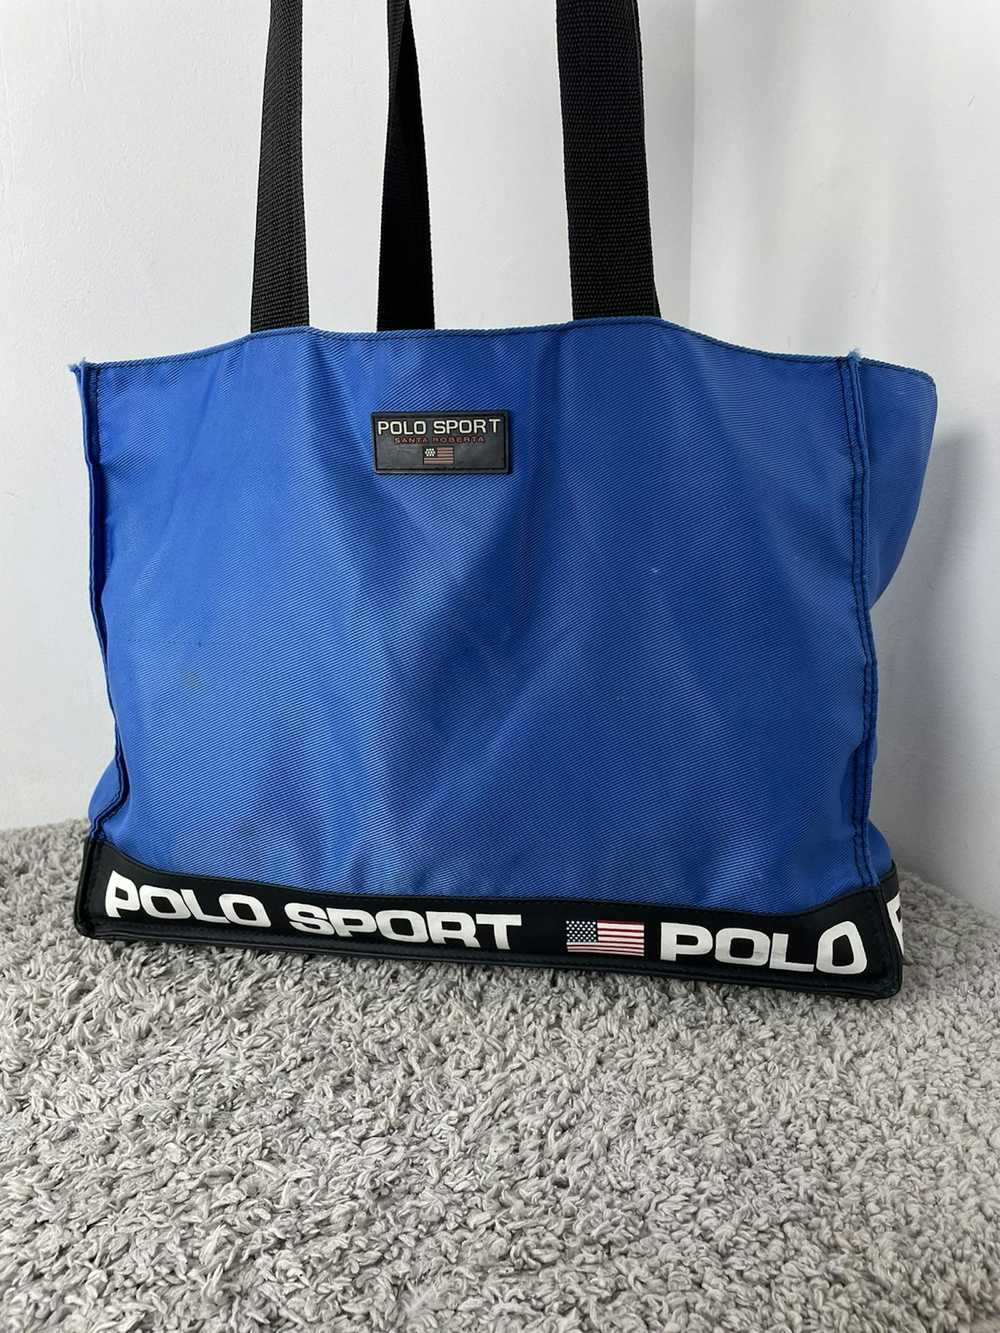 Polo Ralph Lauren Polo Sport Santa Roberta Bag - image 3